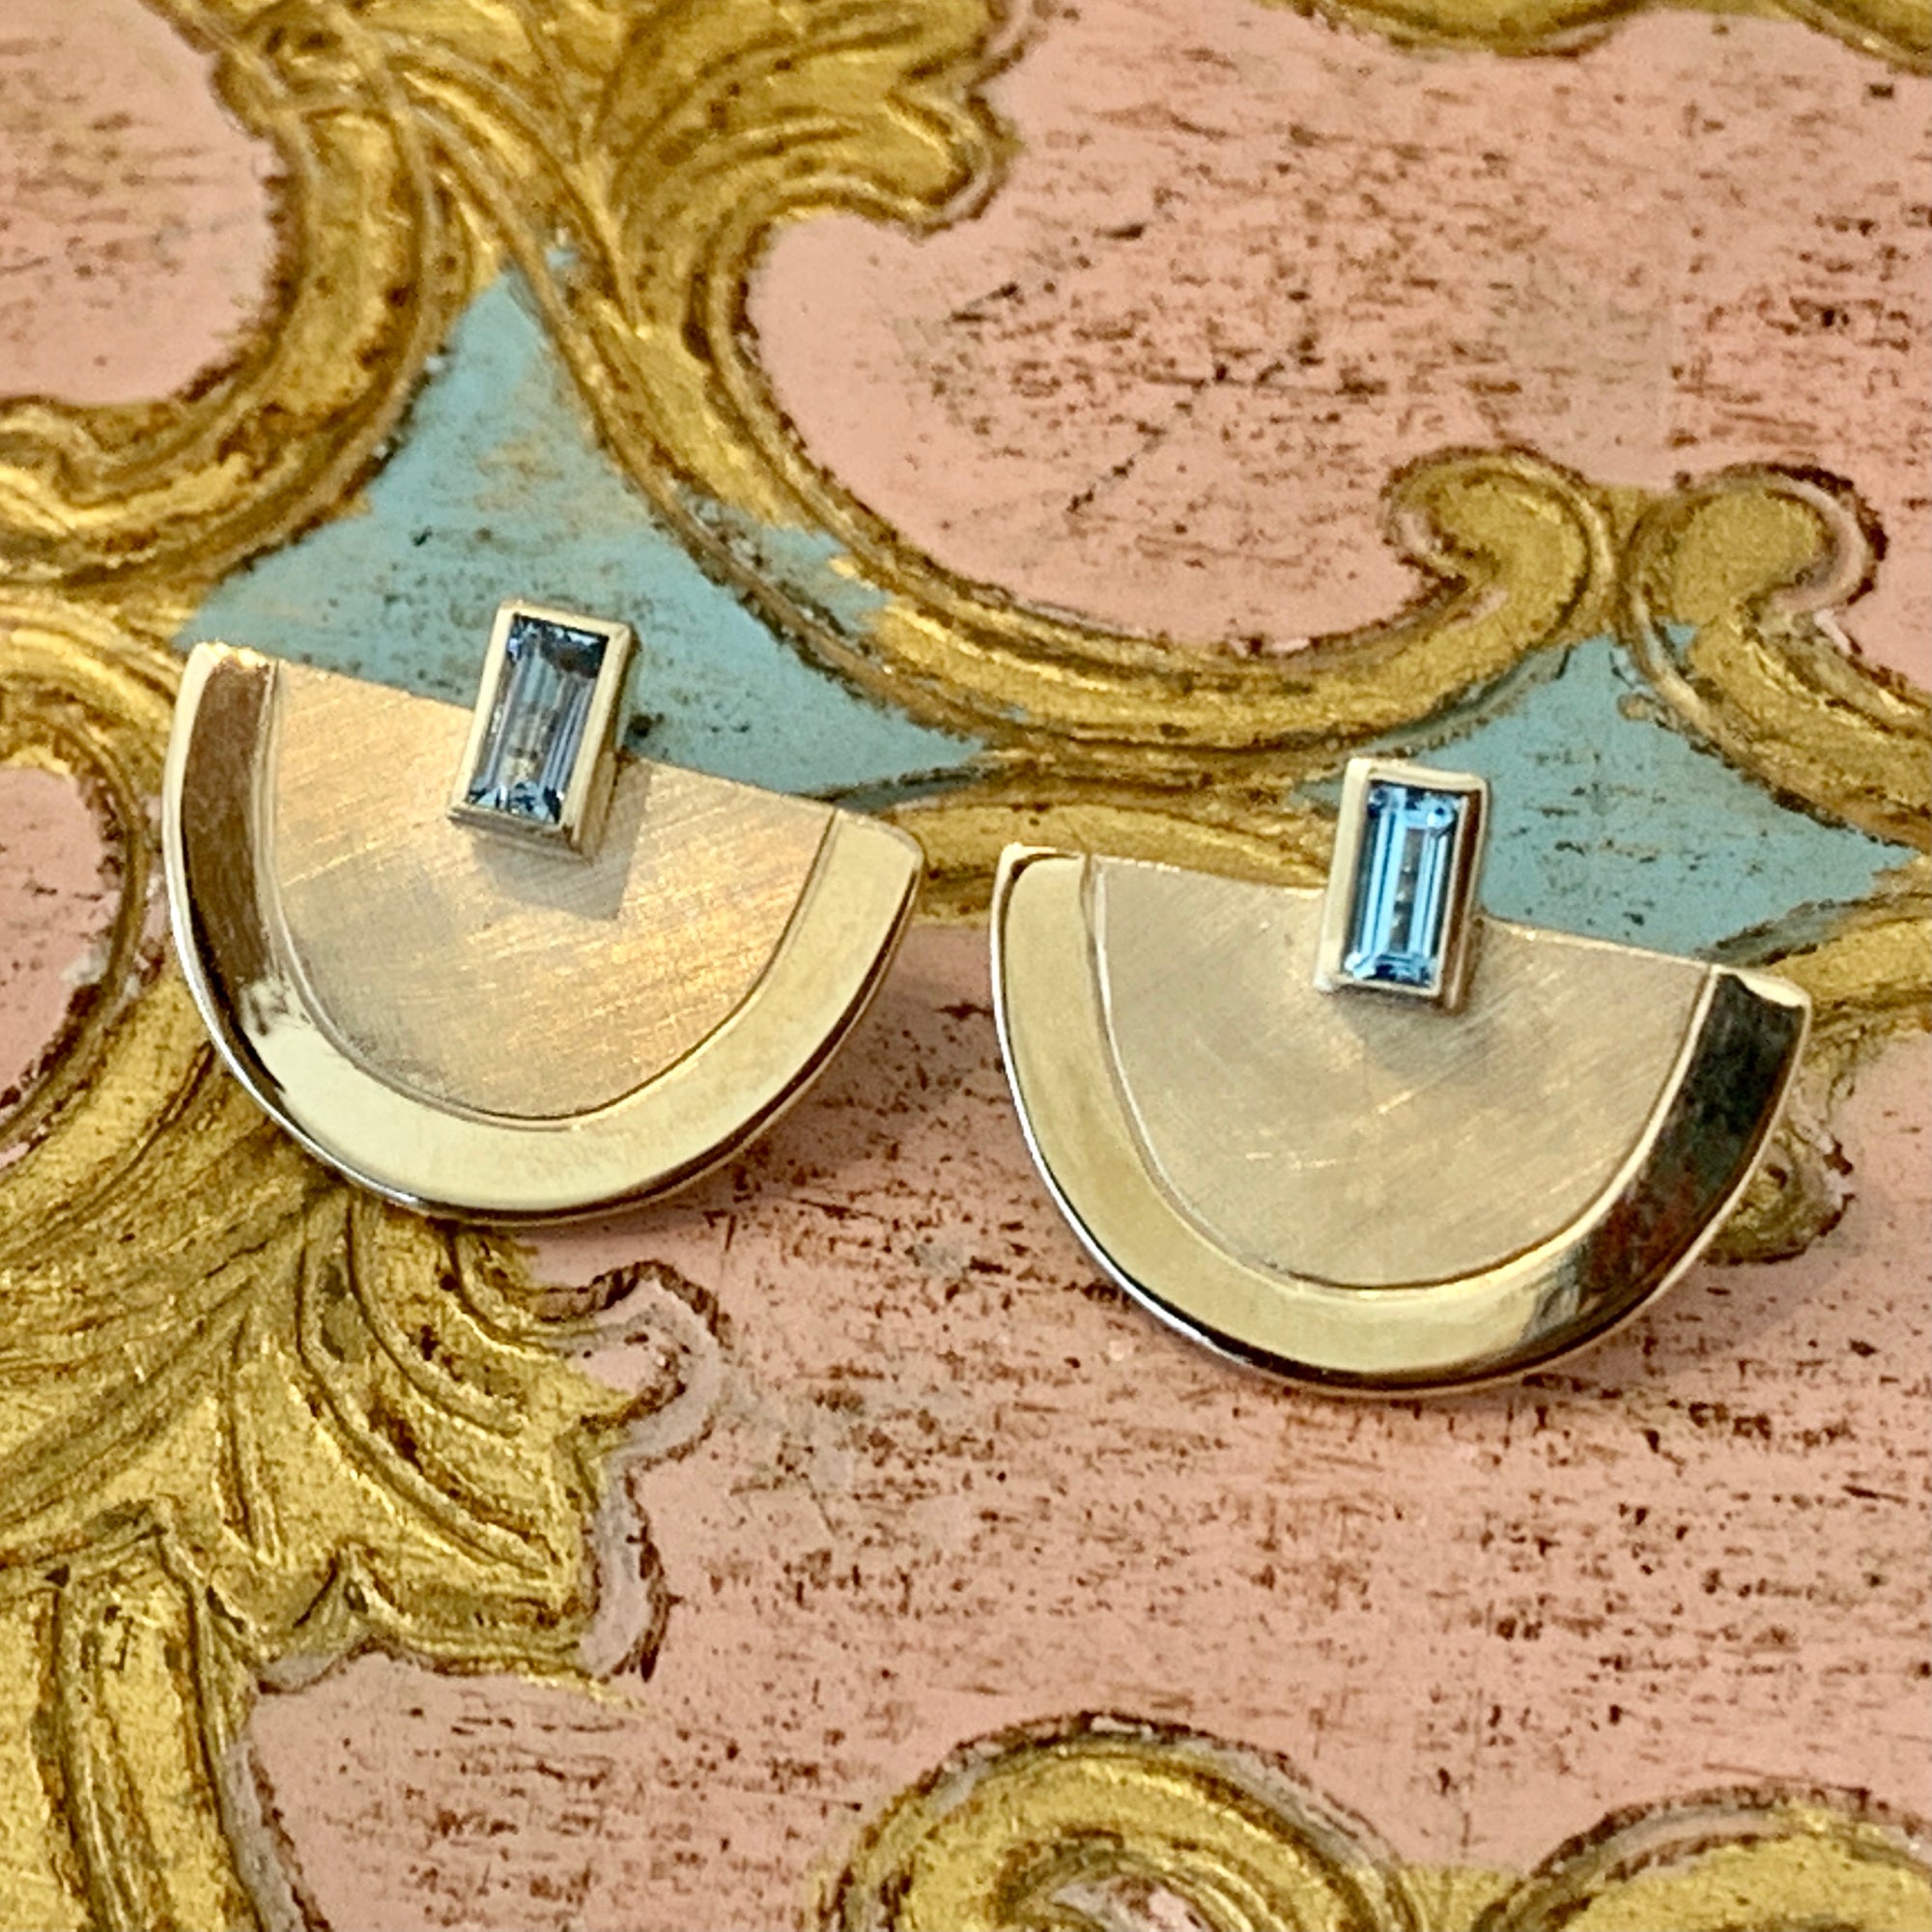 JONE 14k Gold Blue Topaz Earrings